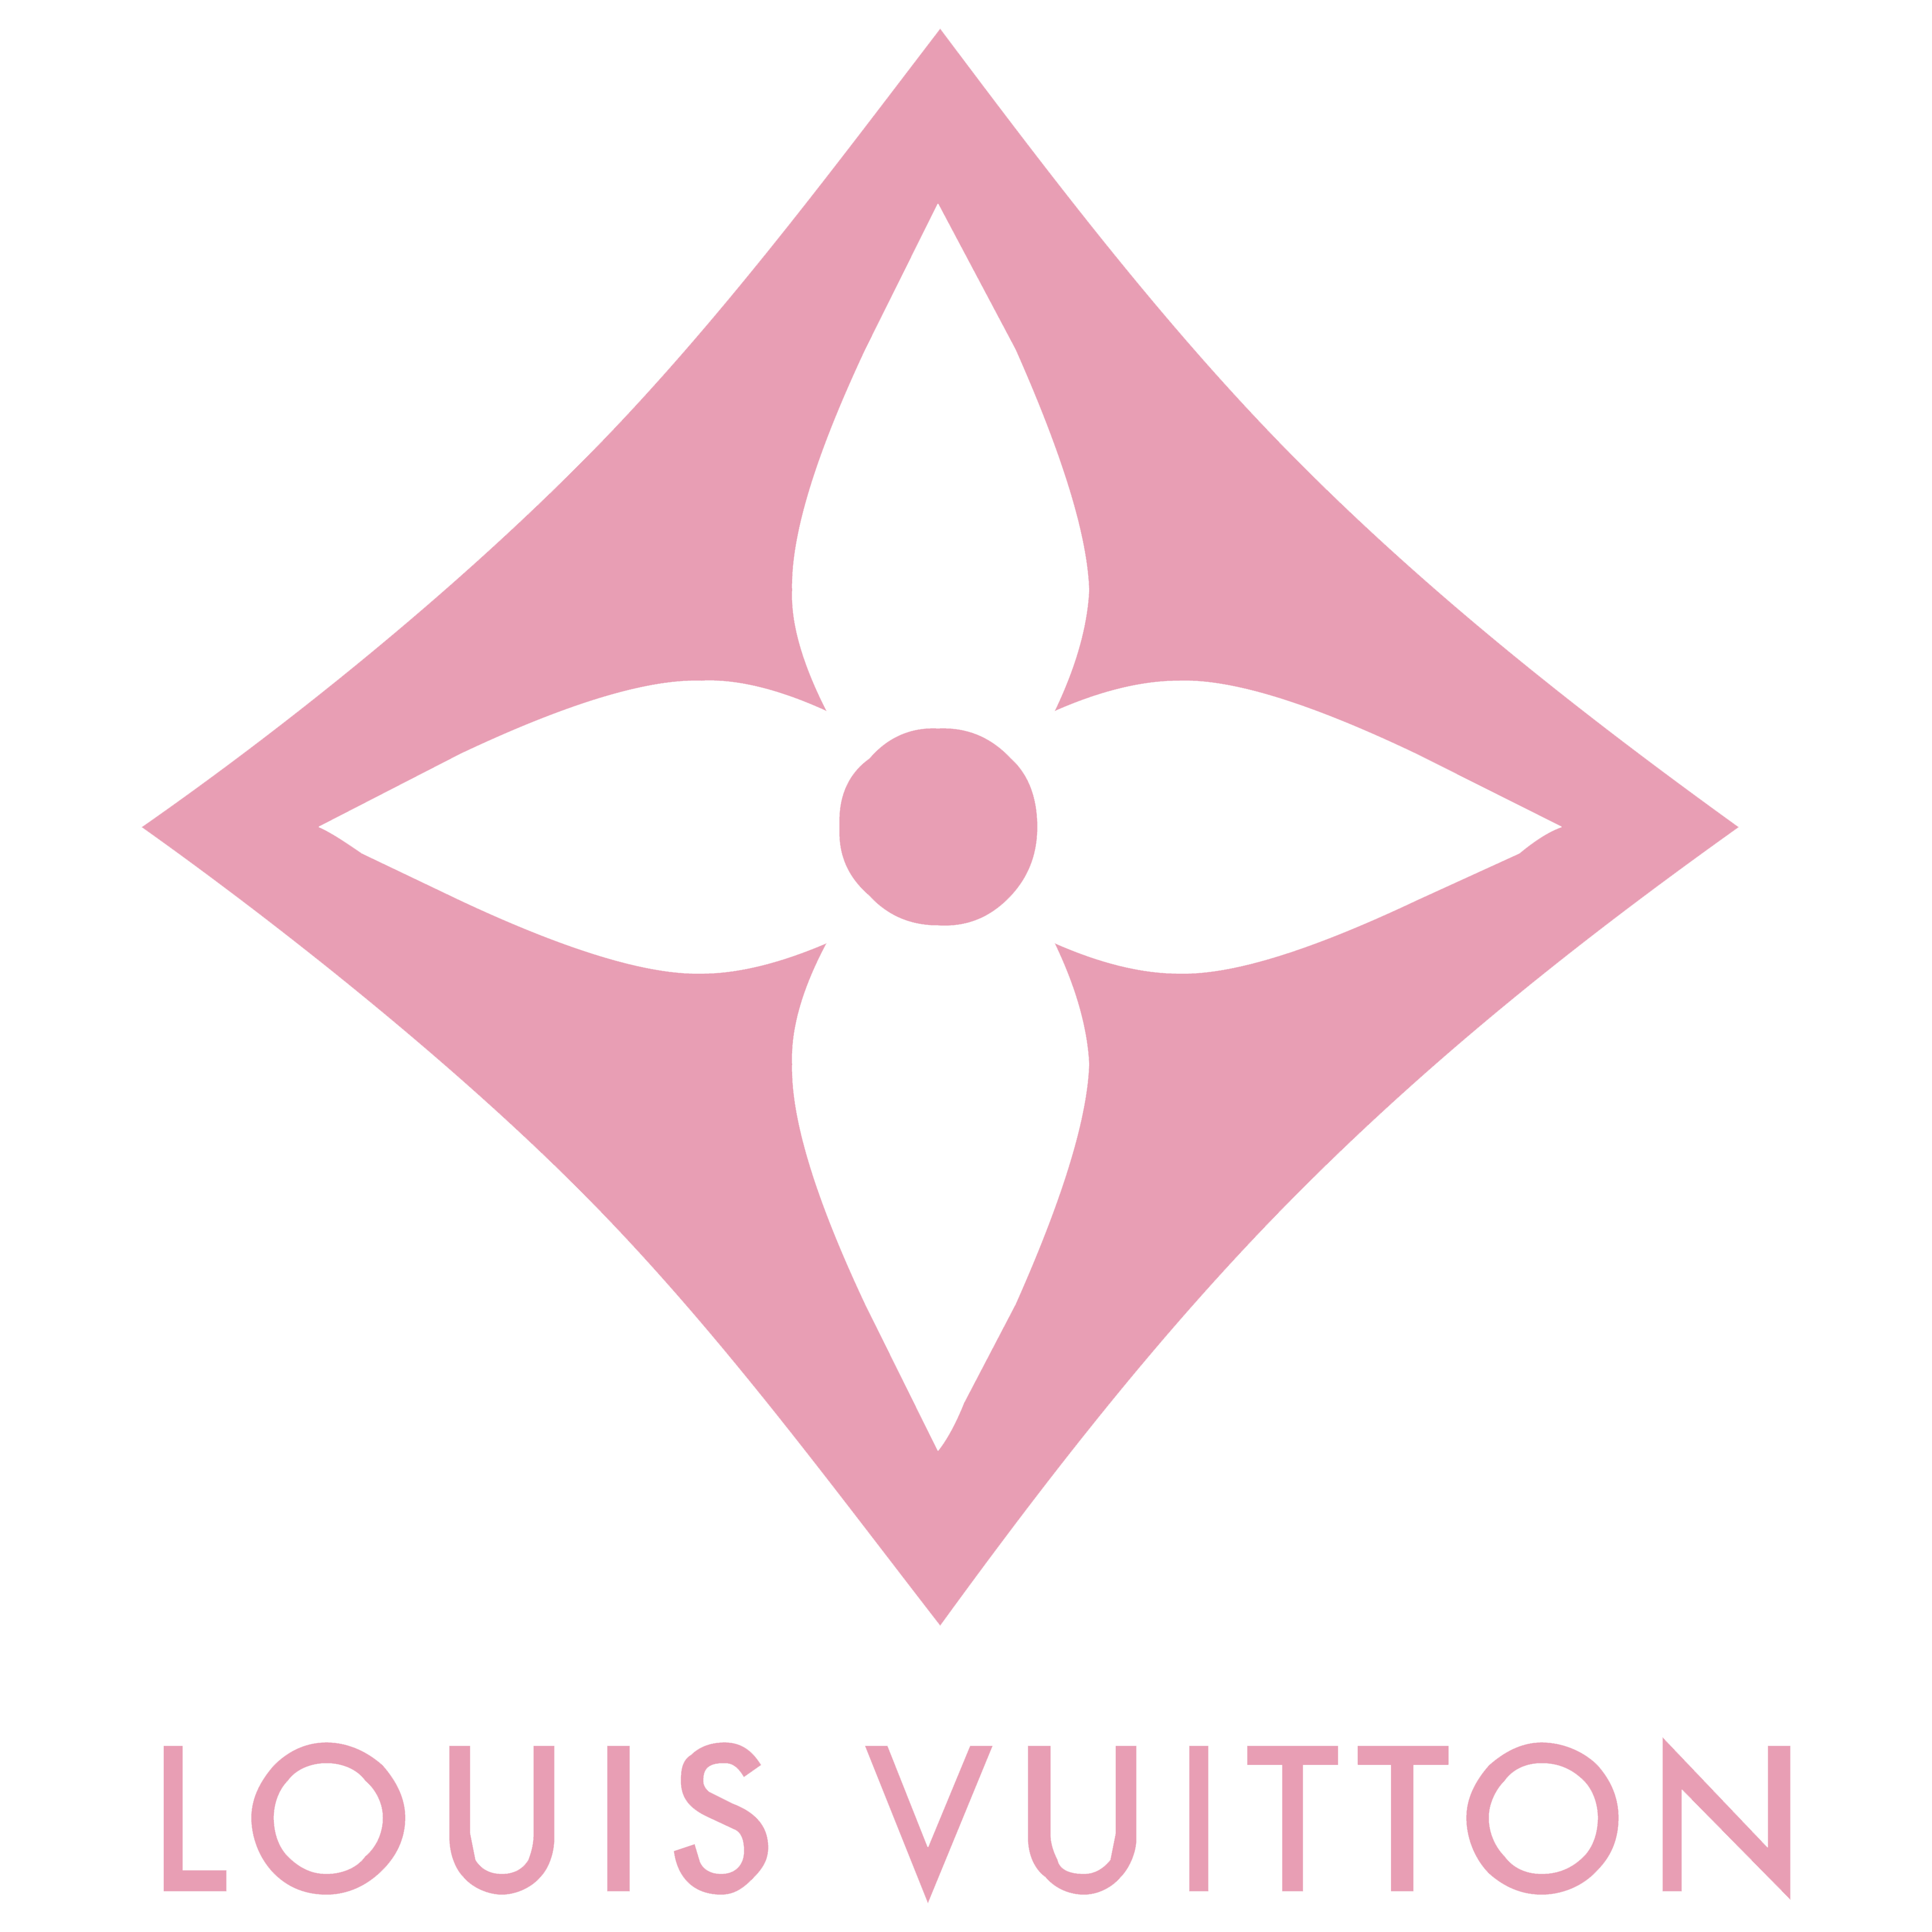 Louis Vuitton Rectangle Style SVG